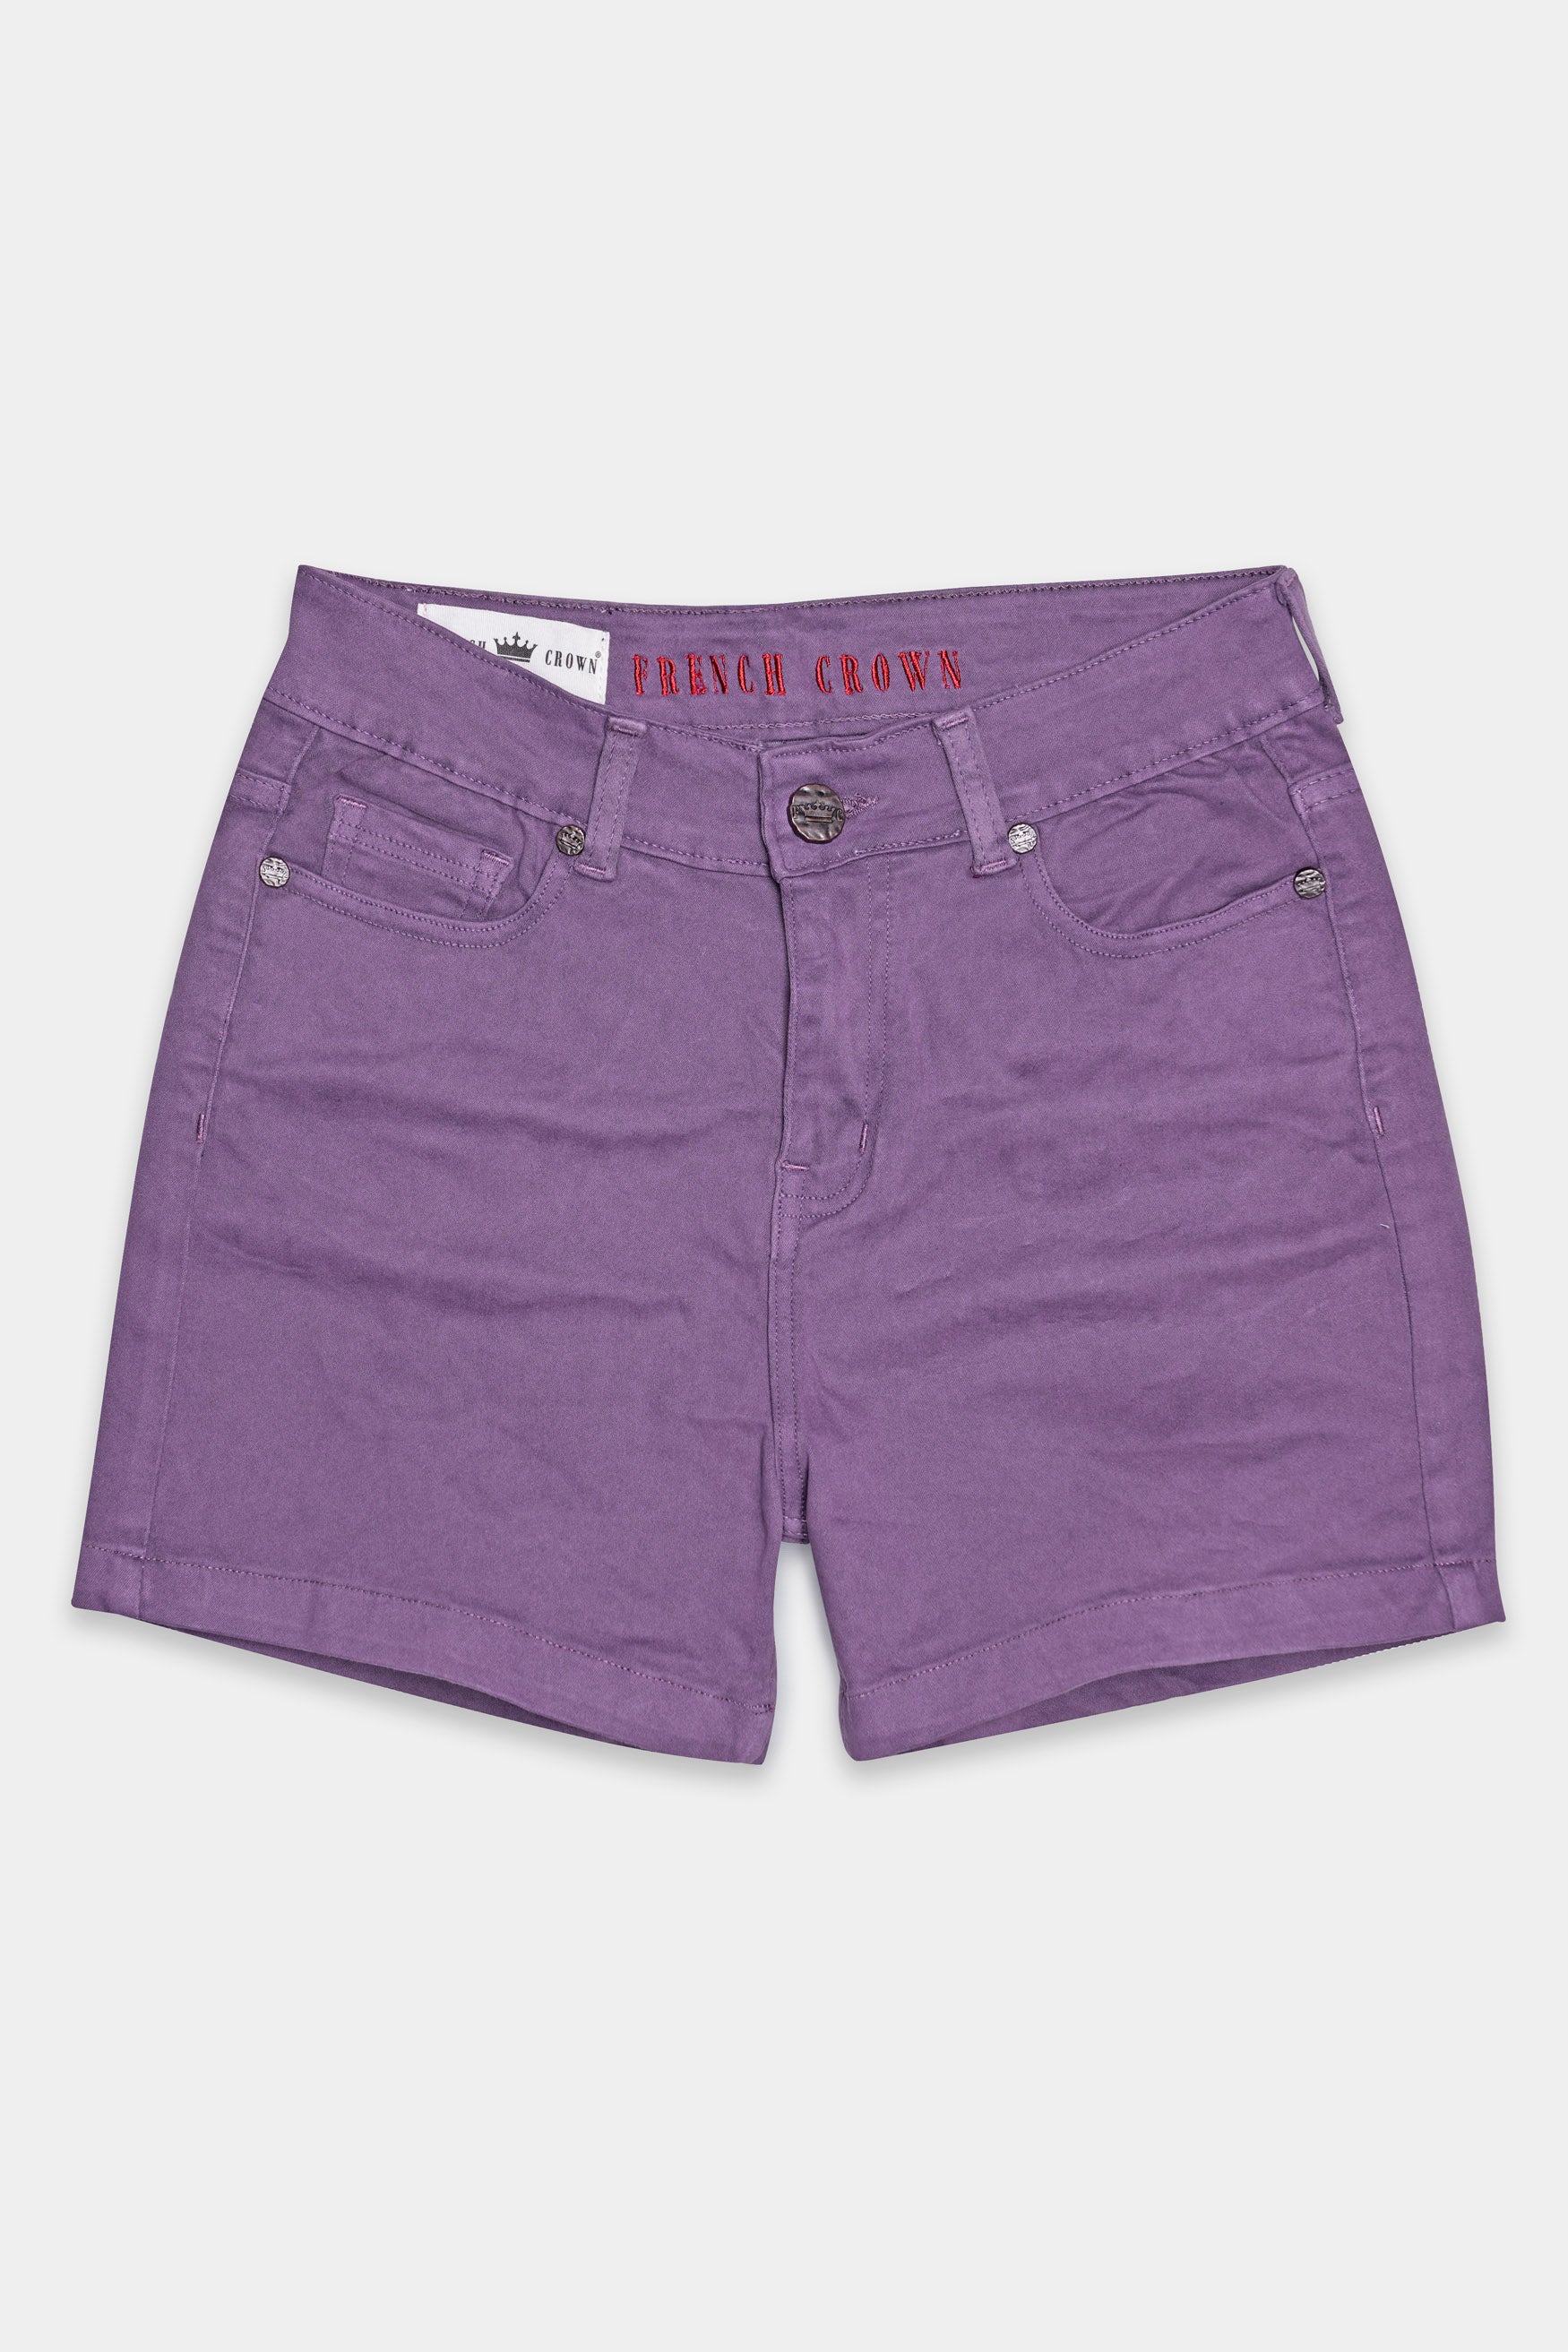 Oyster Purple Women Denim Shorts